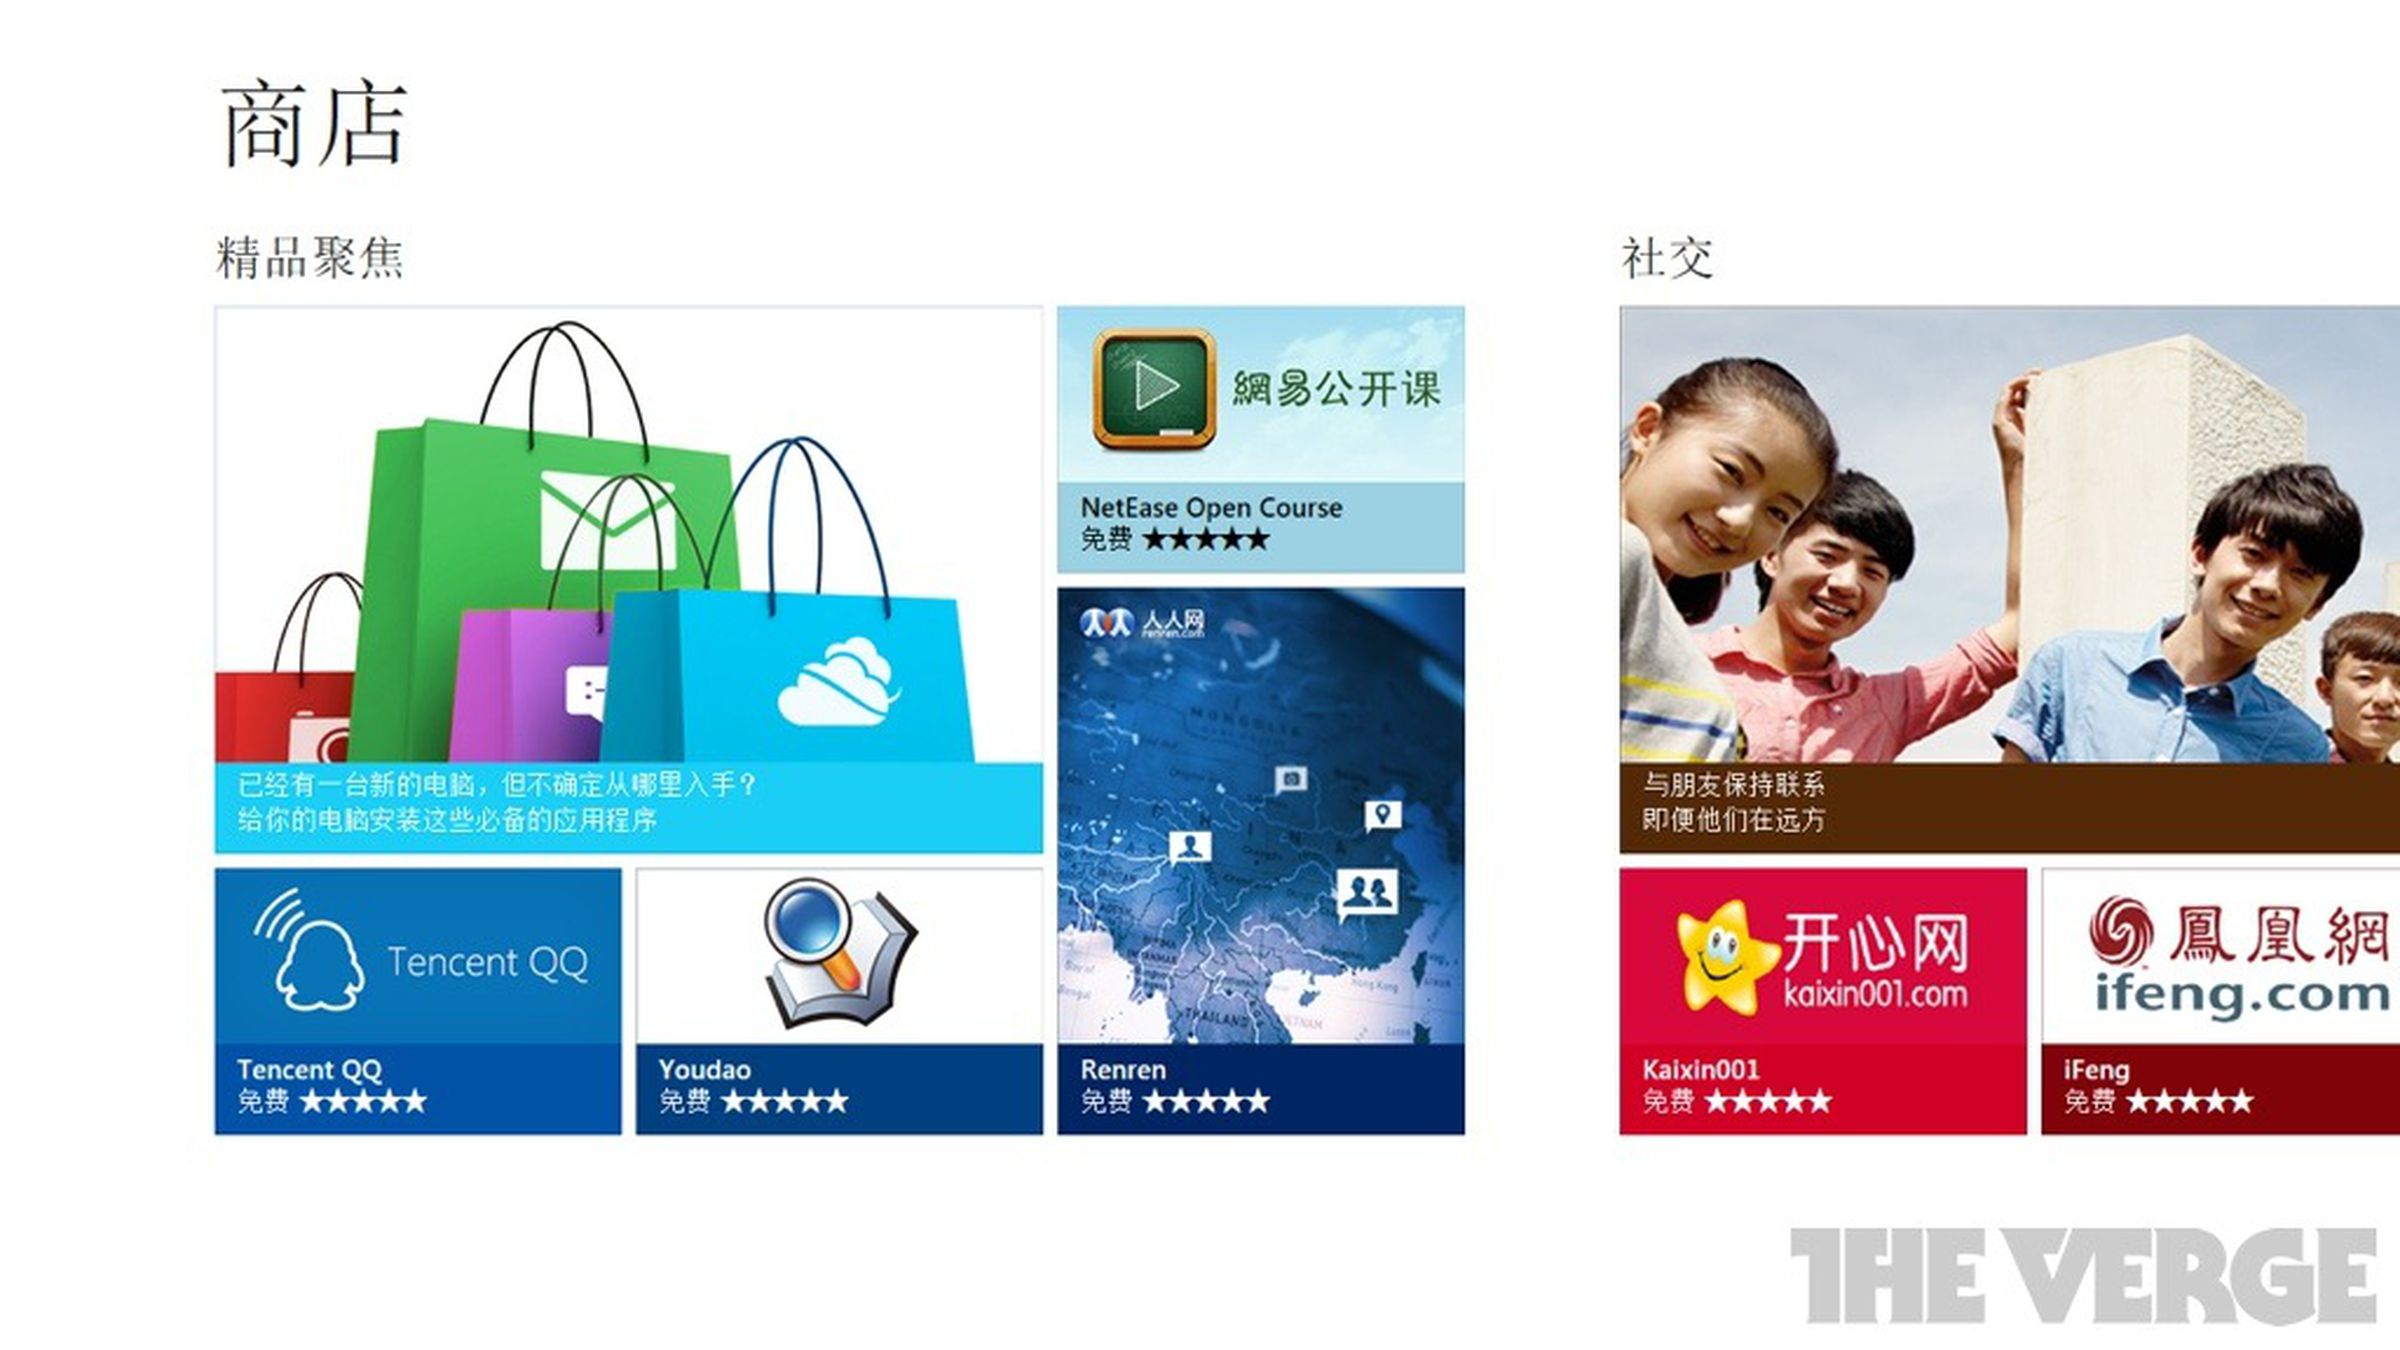 Windows Store for Windows 8 screenshots